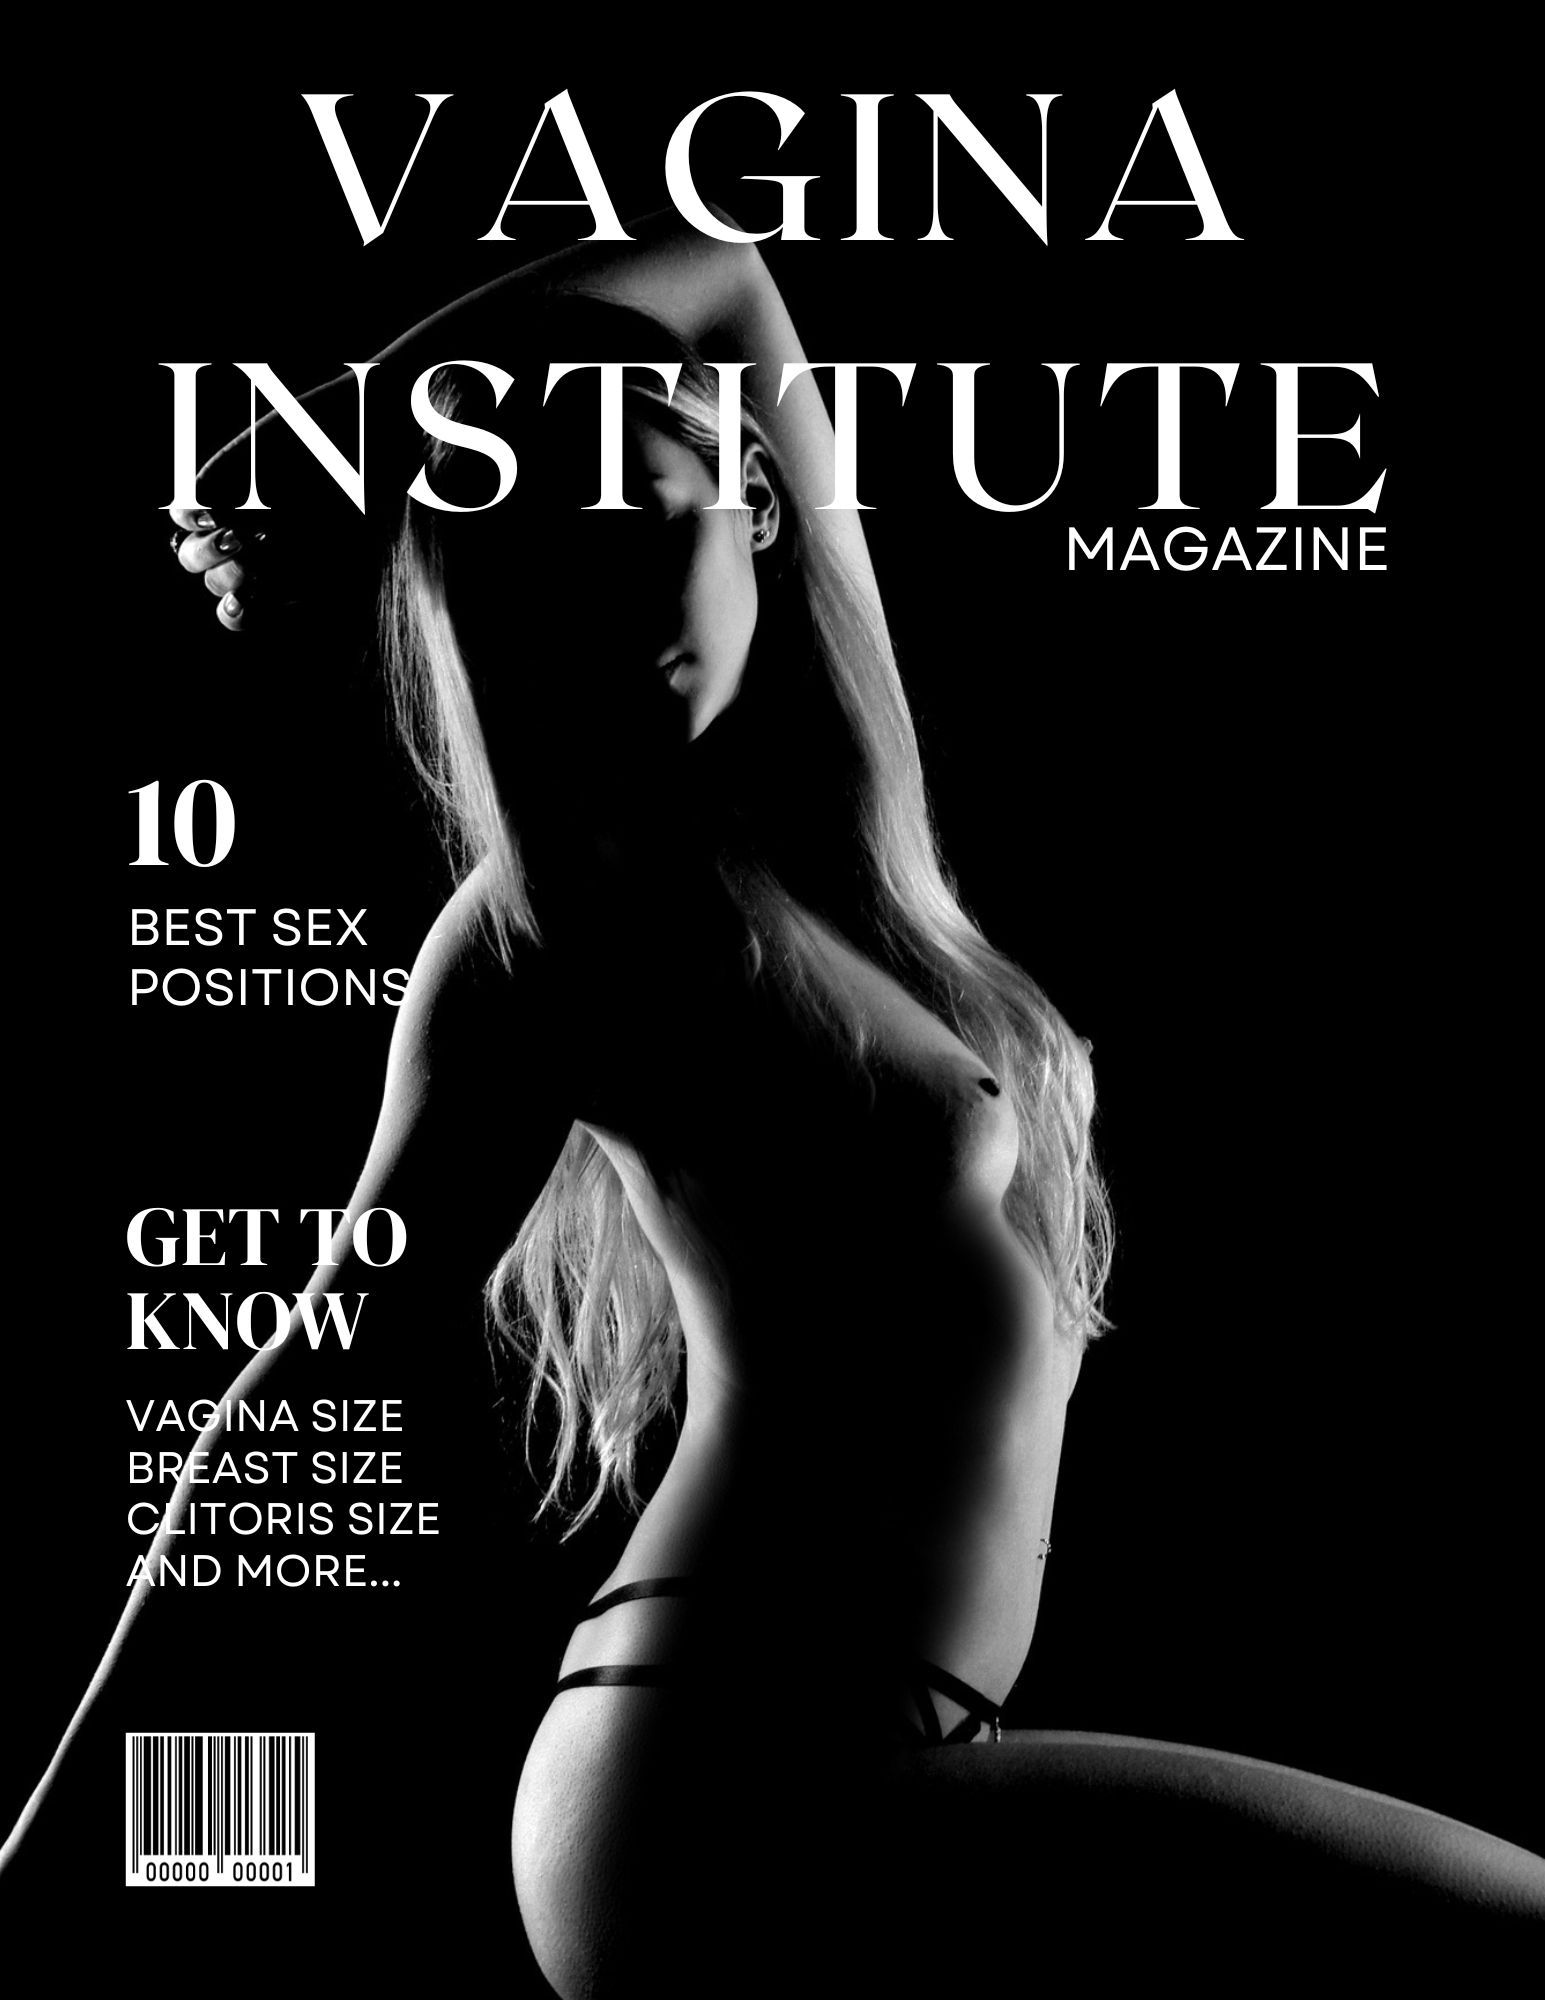 Vagina institute magazine 10 best sex positions for women